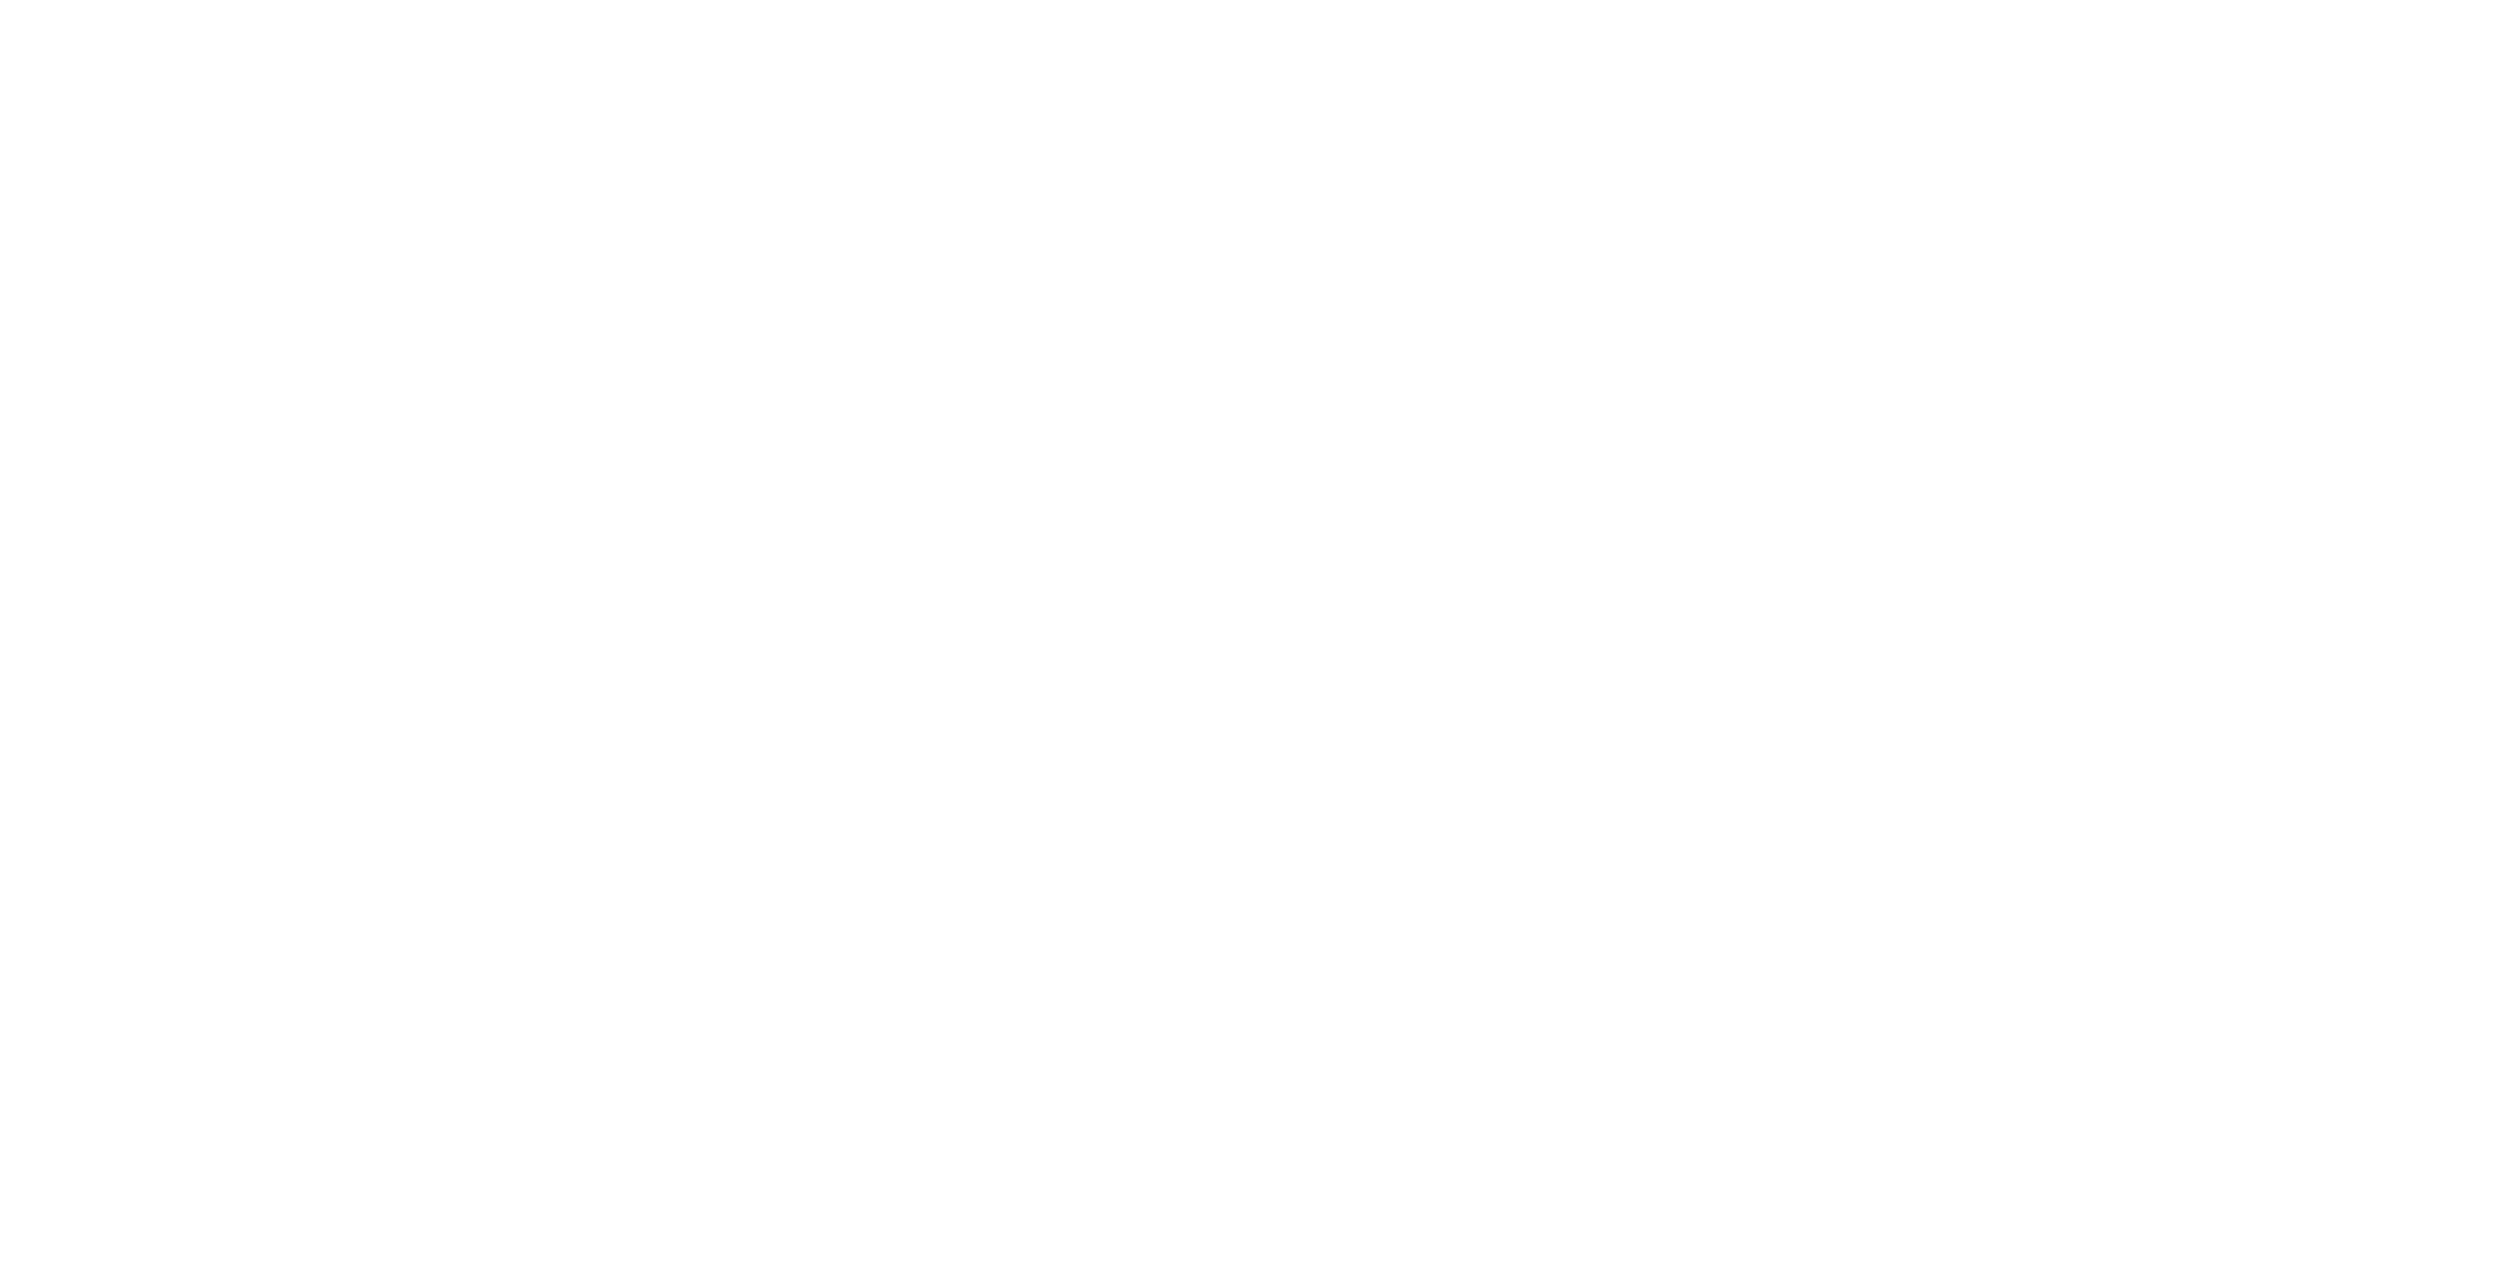 Fog City Singers